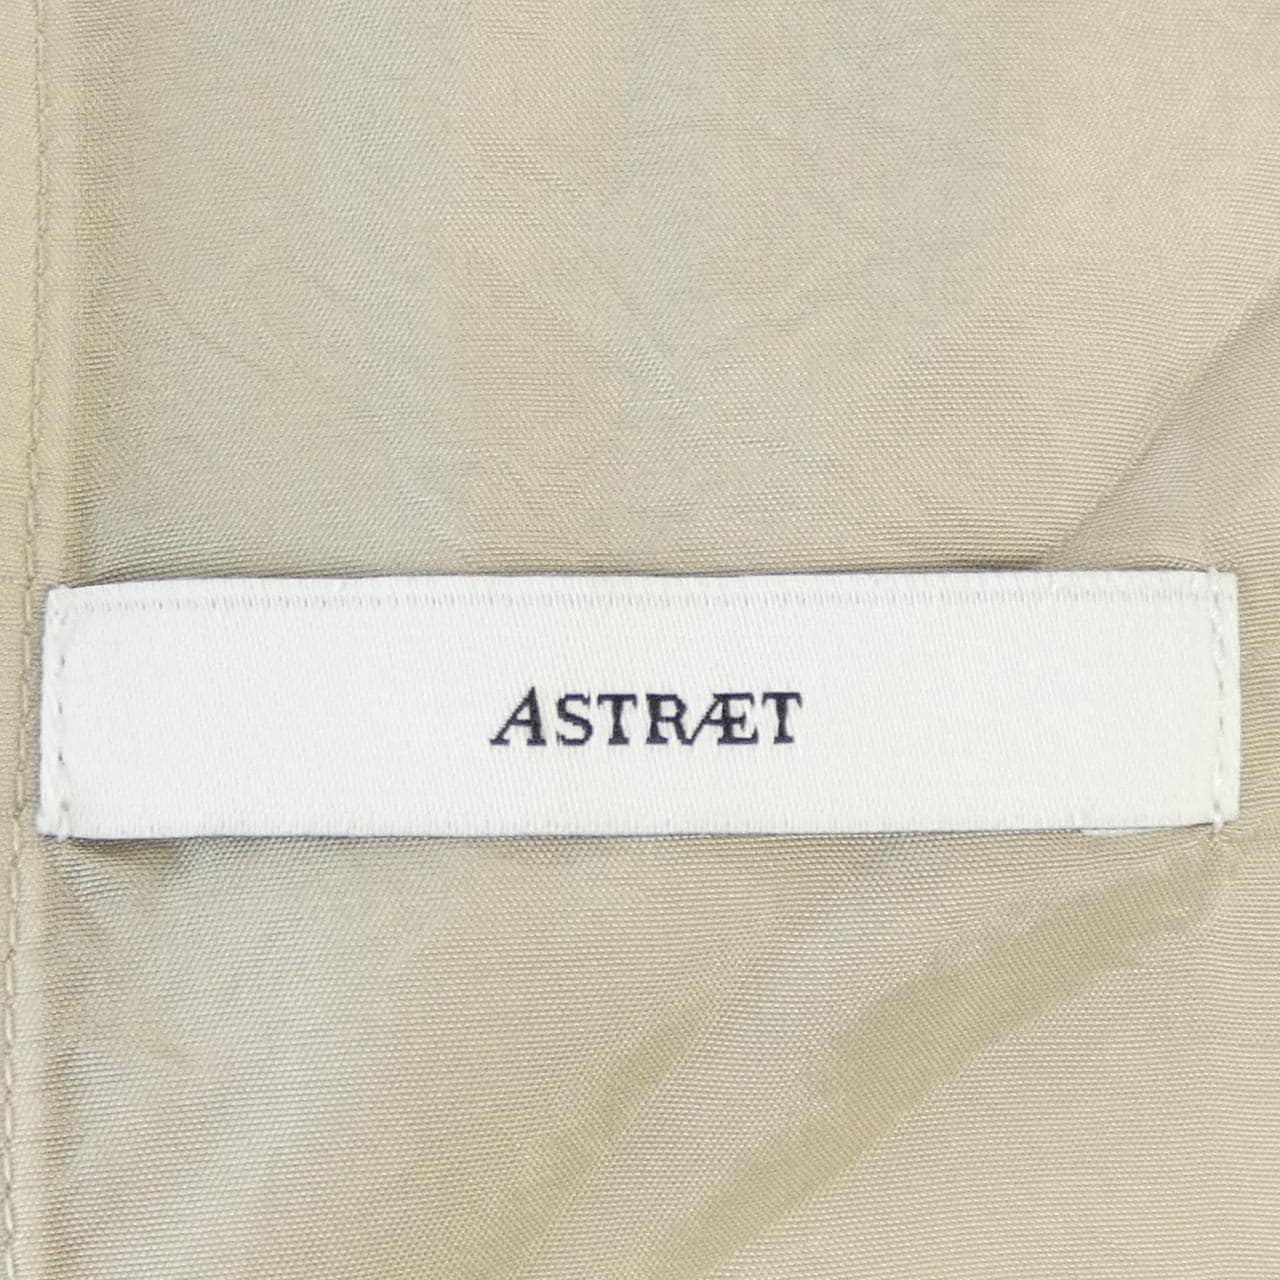 Astrat ASTRAET褲子